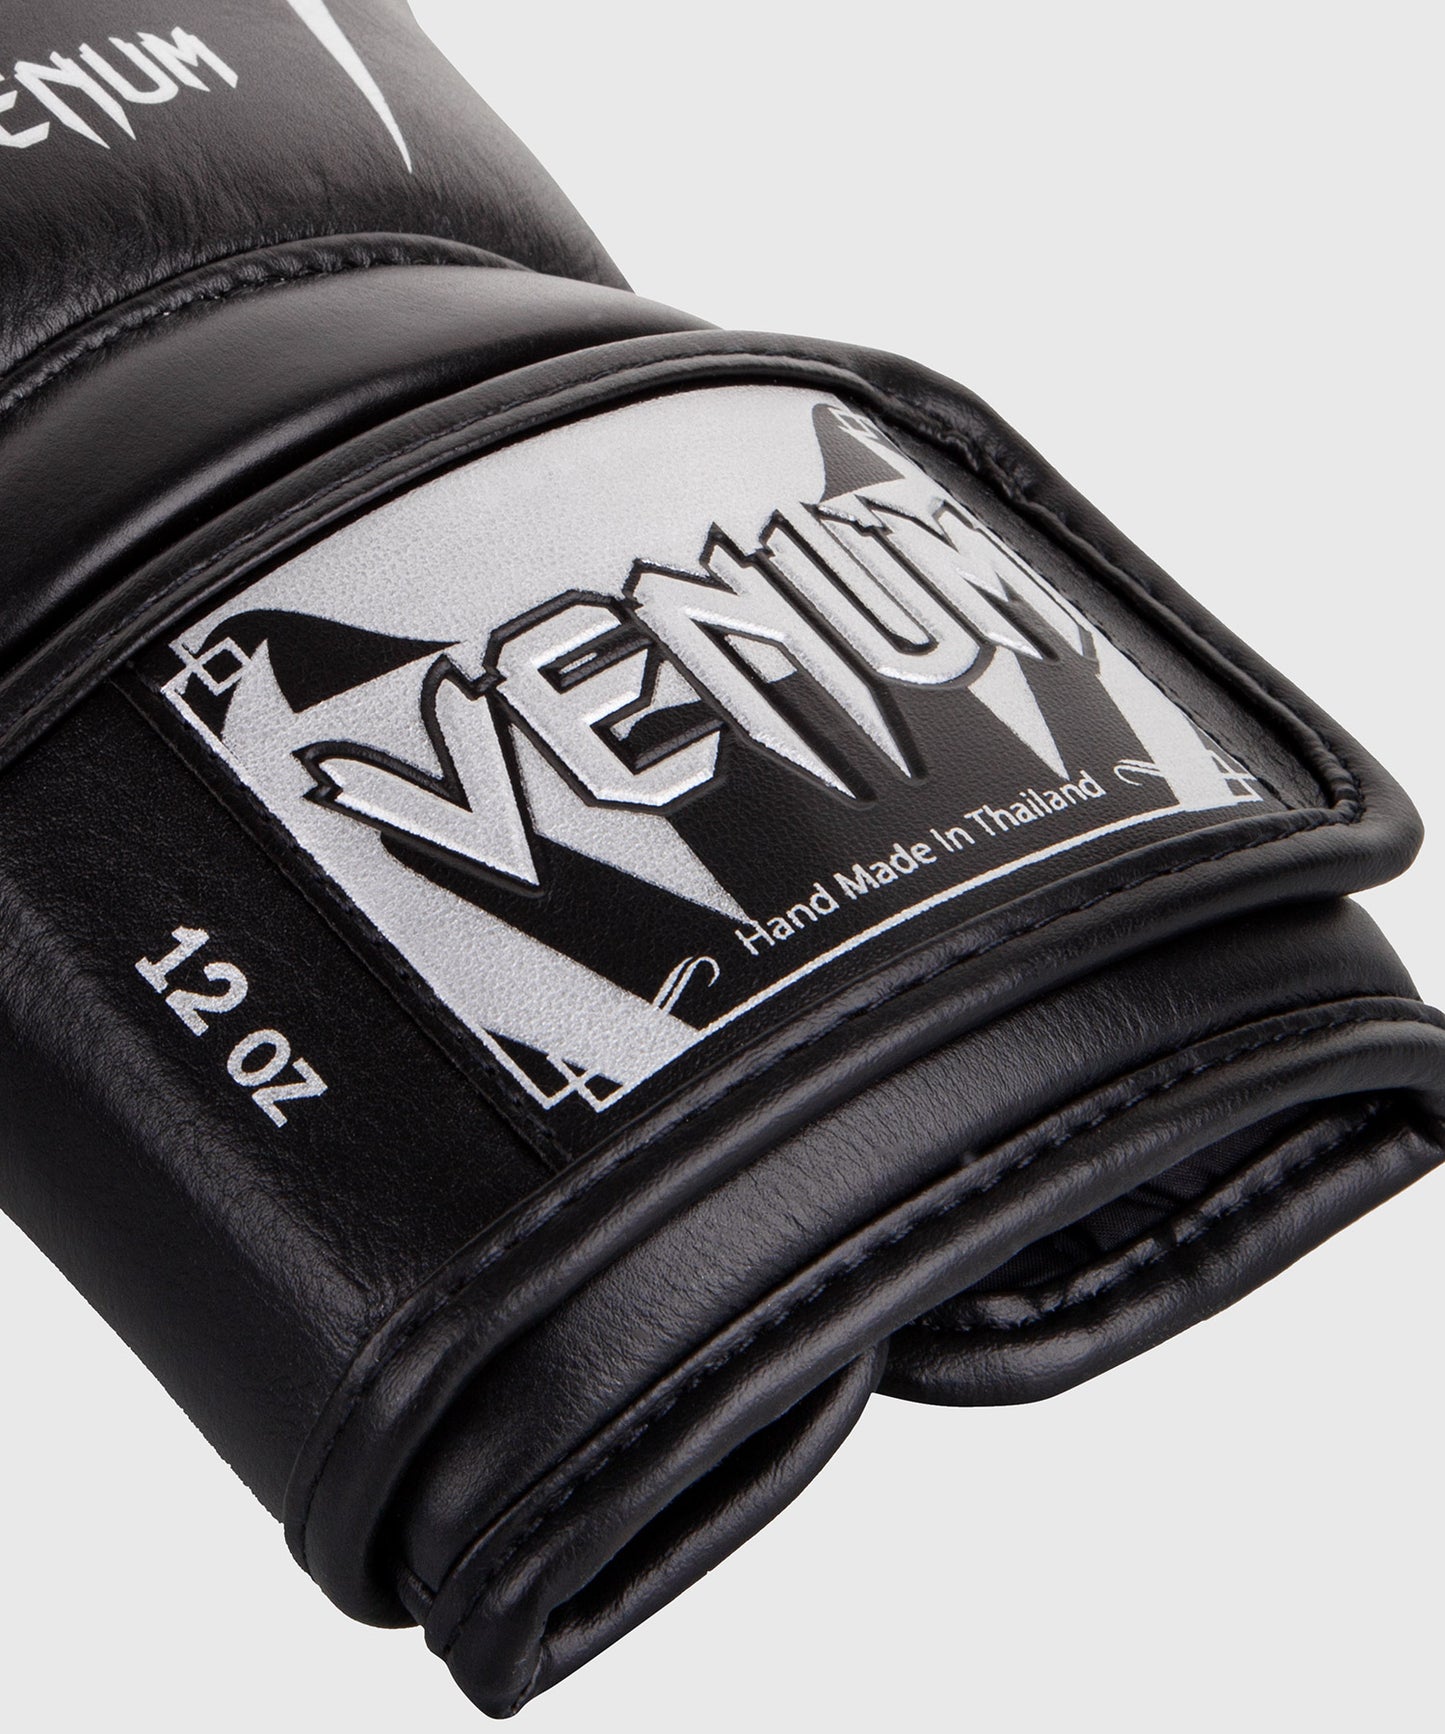 Venum Giant 3.0 Boxhandschuhe - Nappaleder - Schwarz/Silber